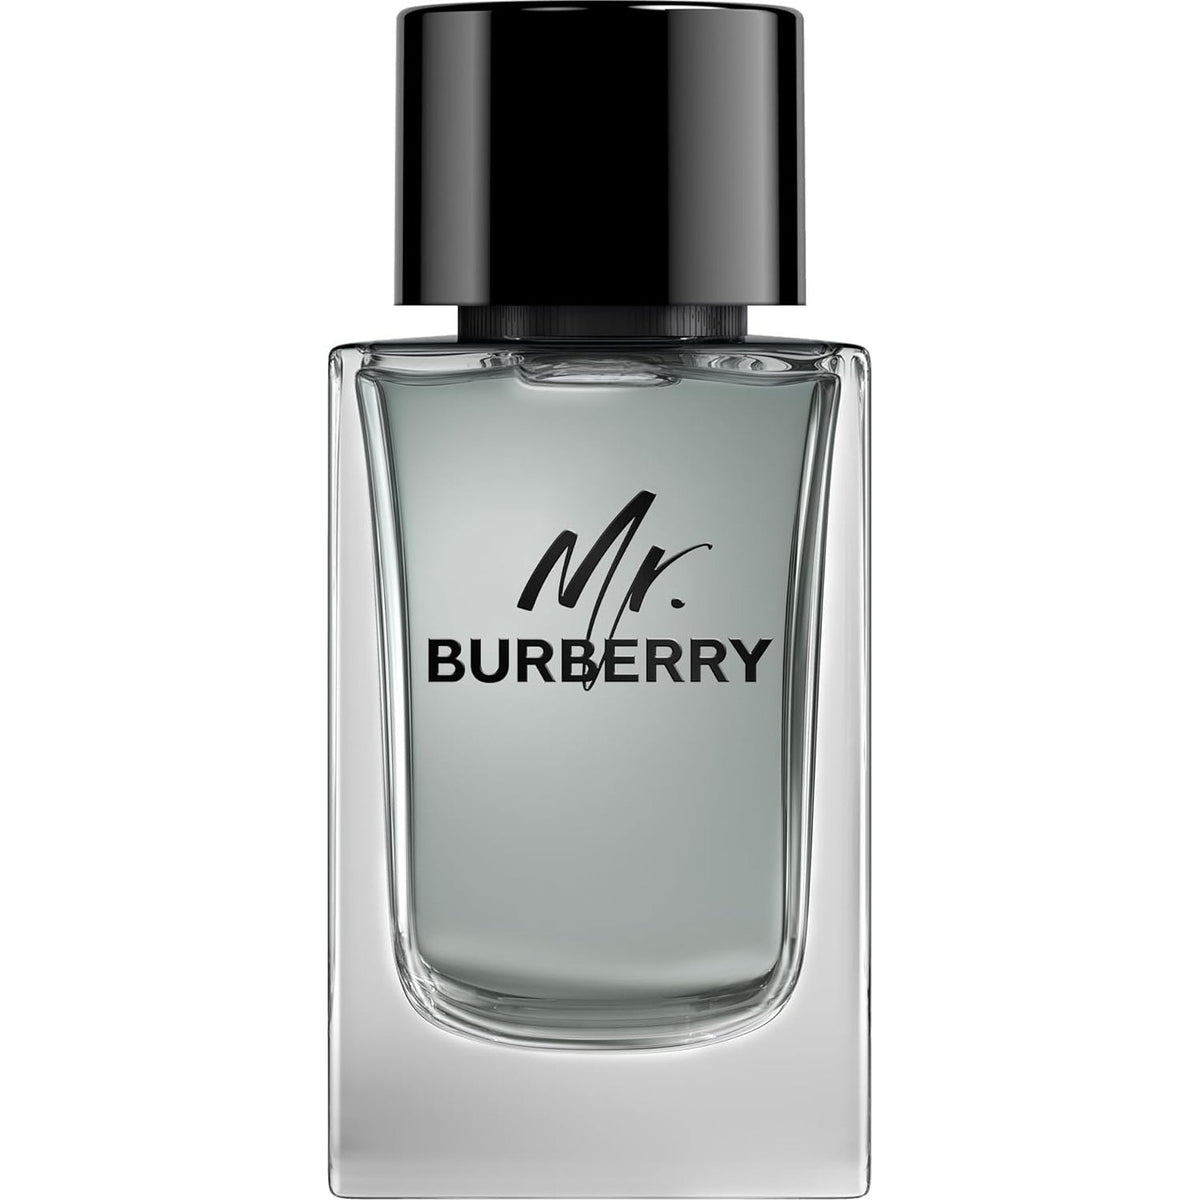 Burberry Mr. Burberry Eau de Toilette 150ml Spray